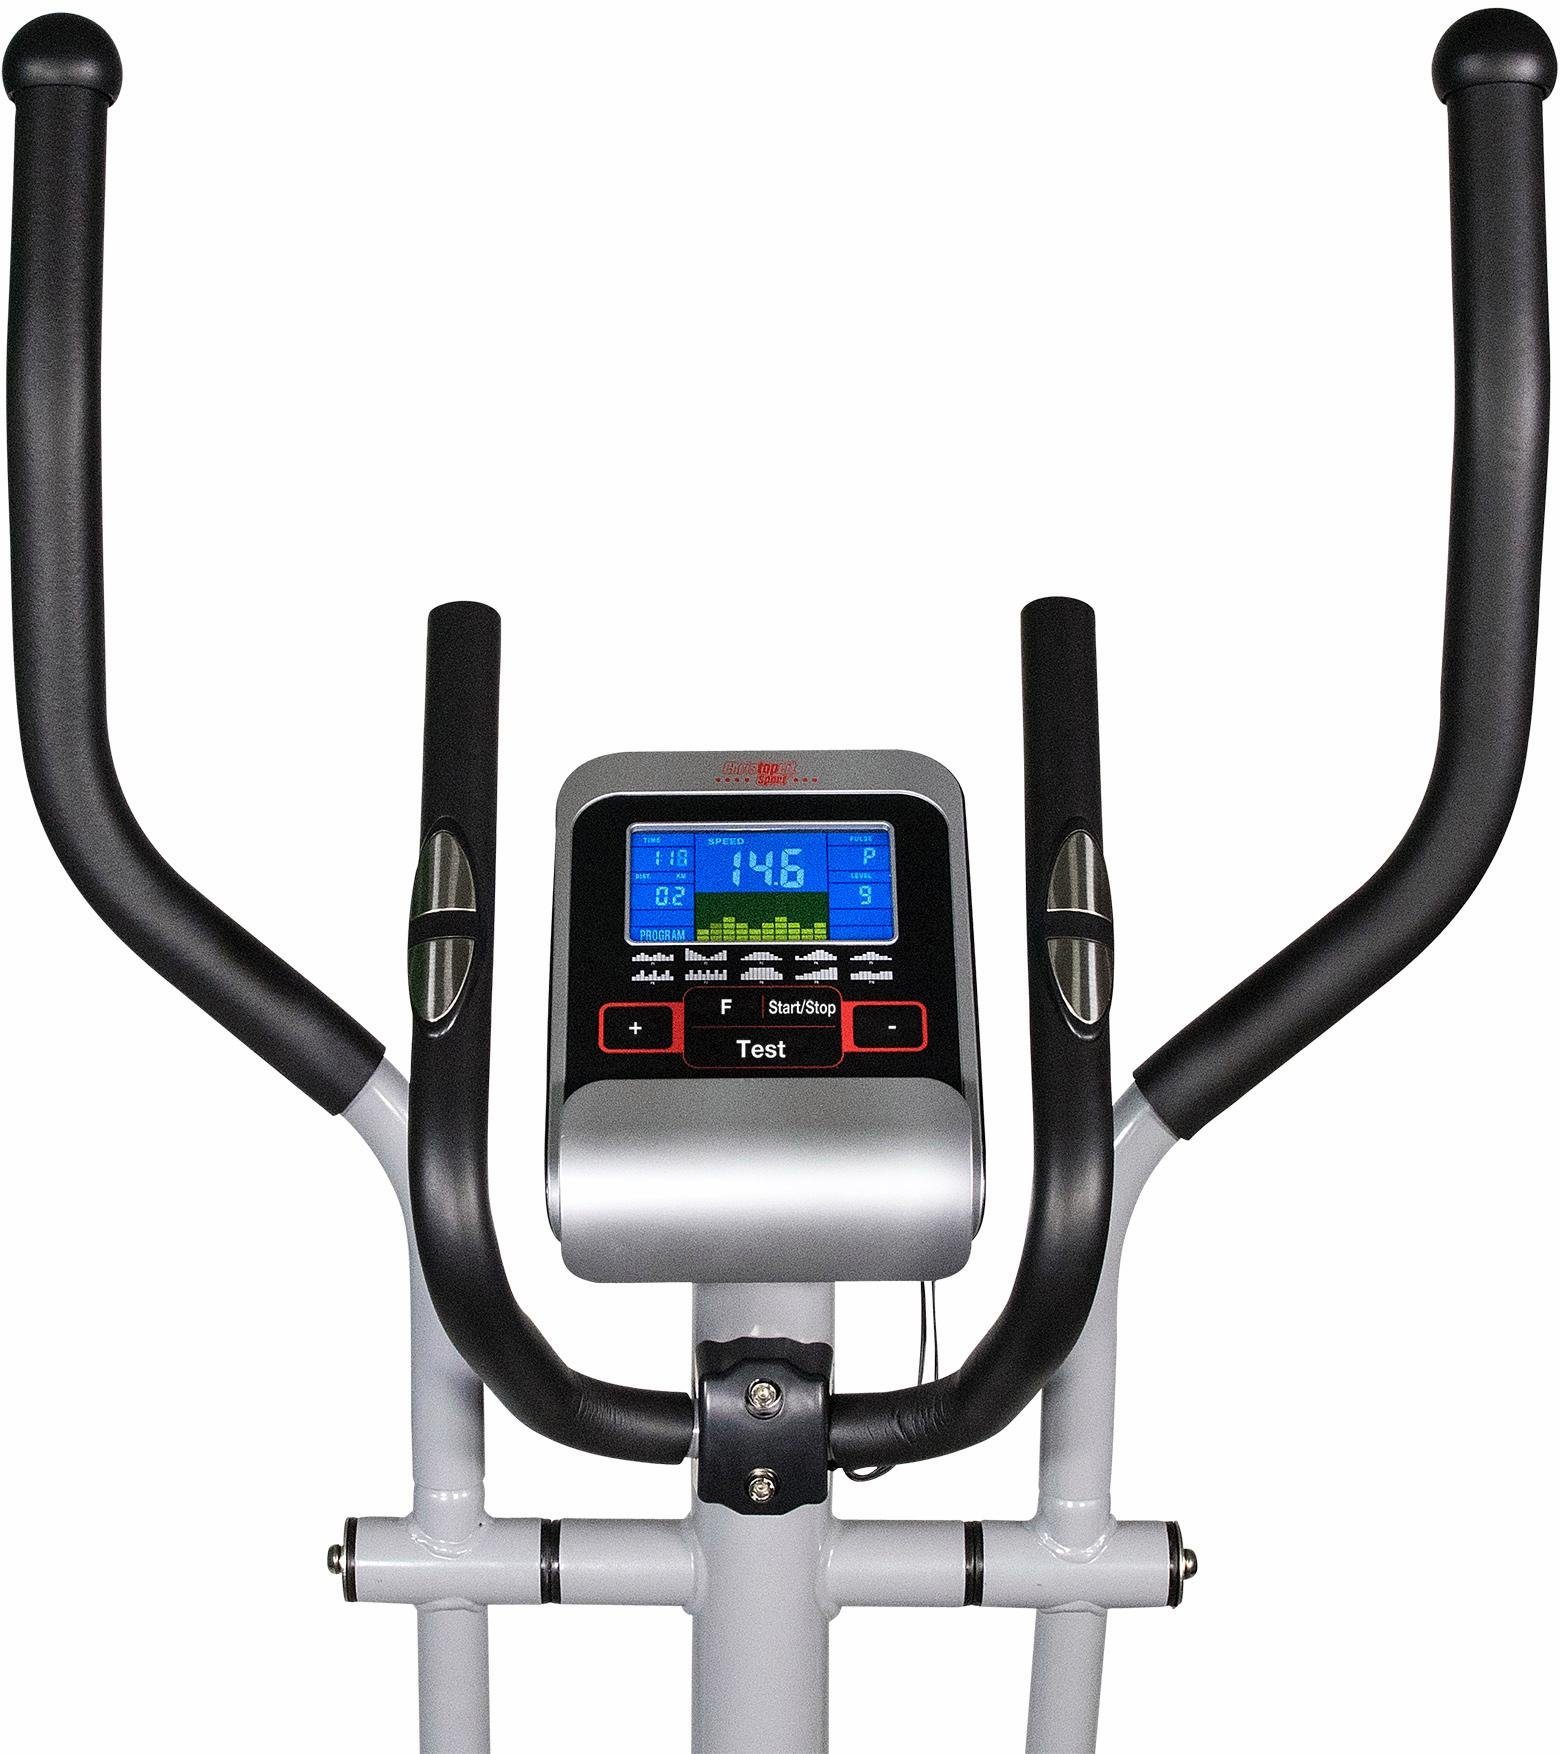 Christopeit Sport® Crosstrainer-ergometer 5 snel gevonden | OTTO